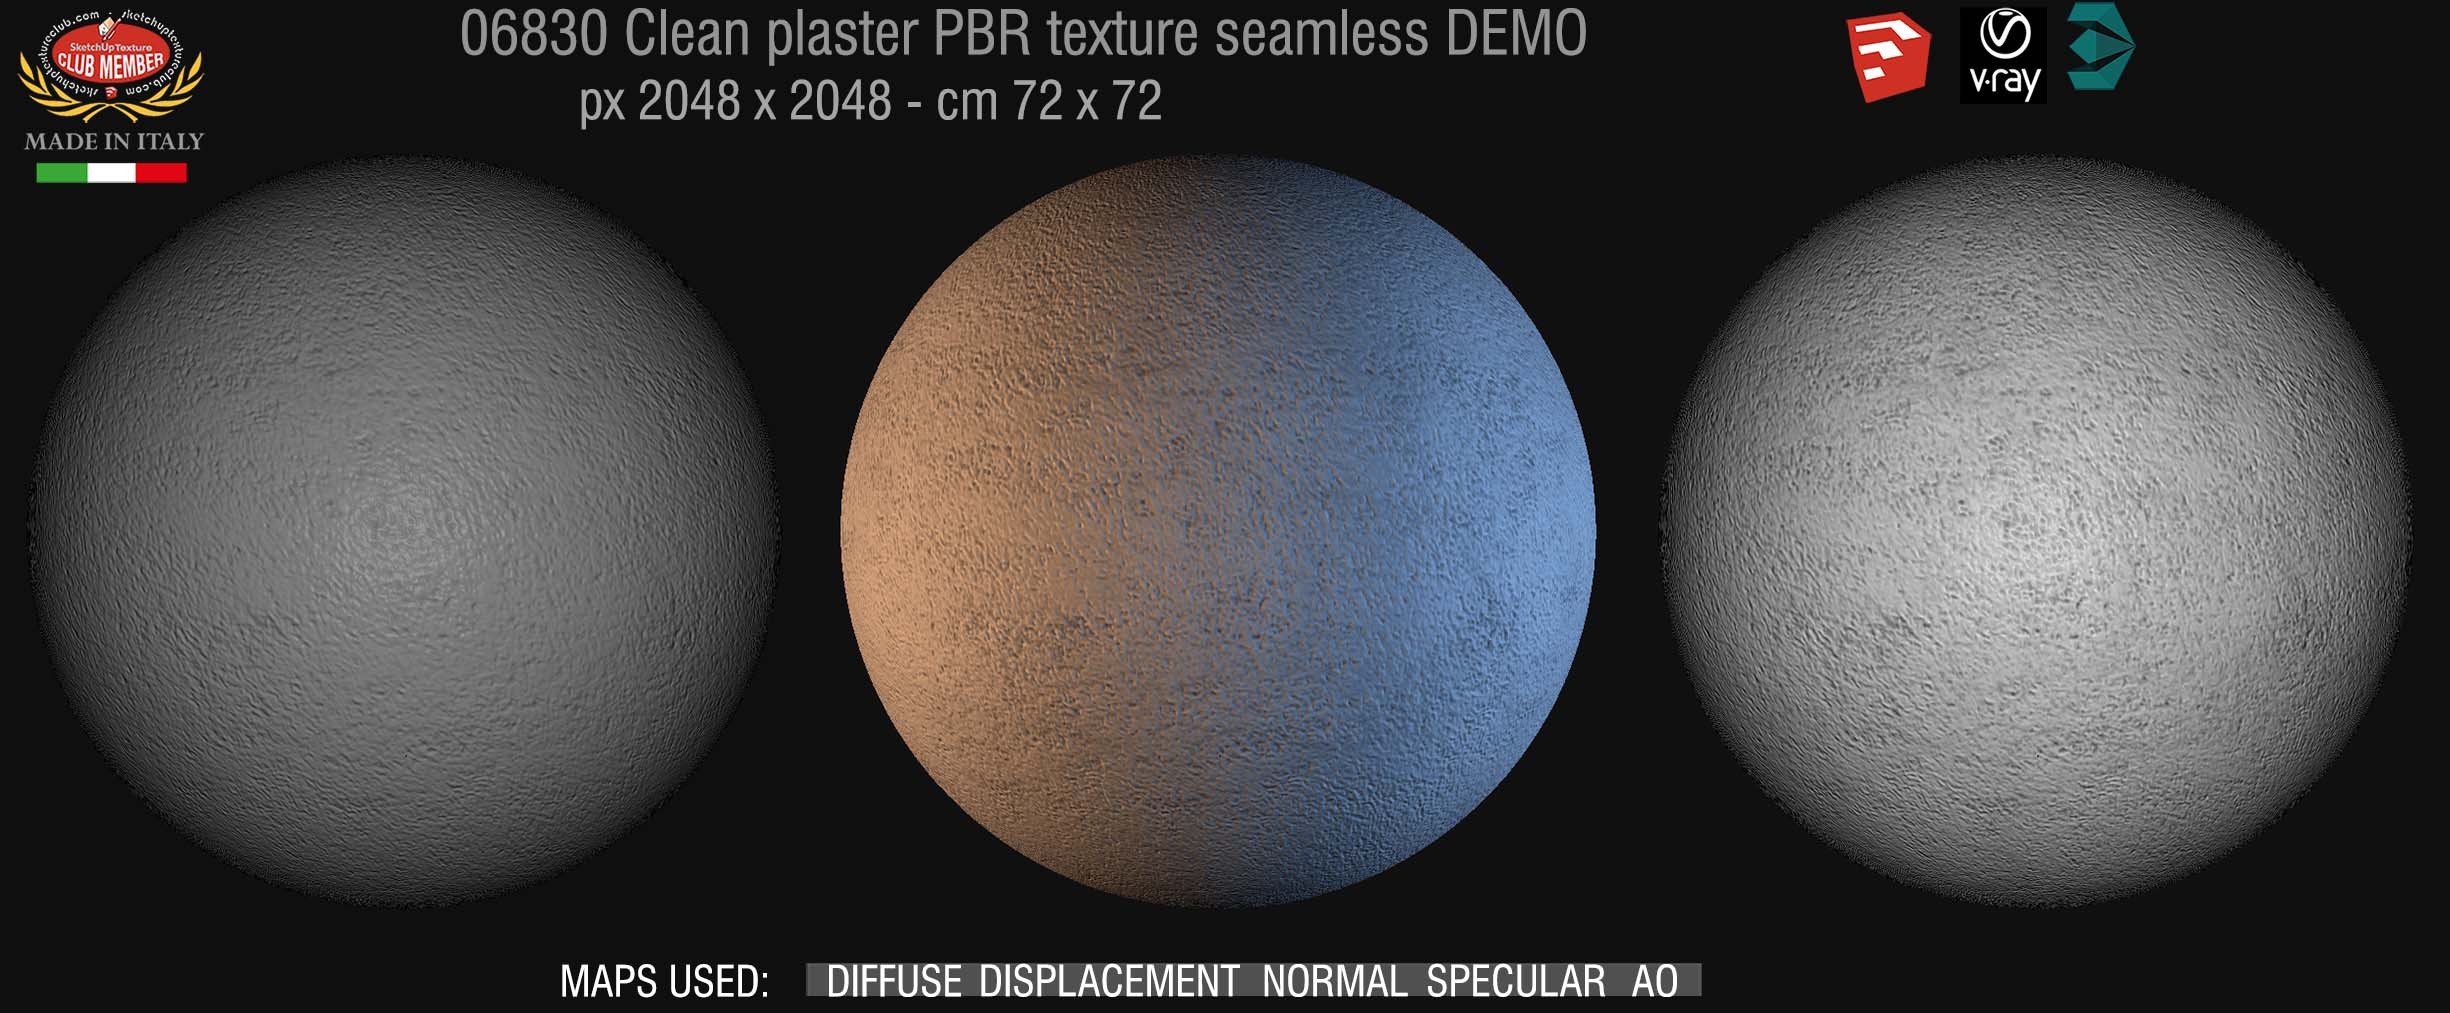 06830 Clean plaster PBR texture seamless